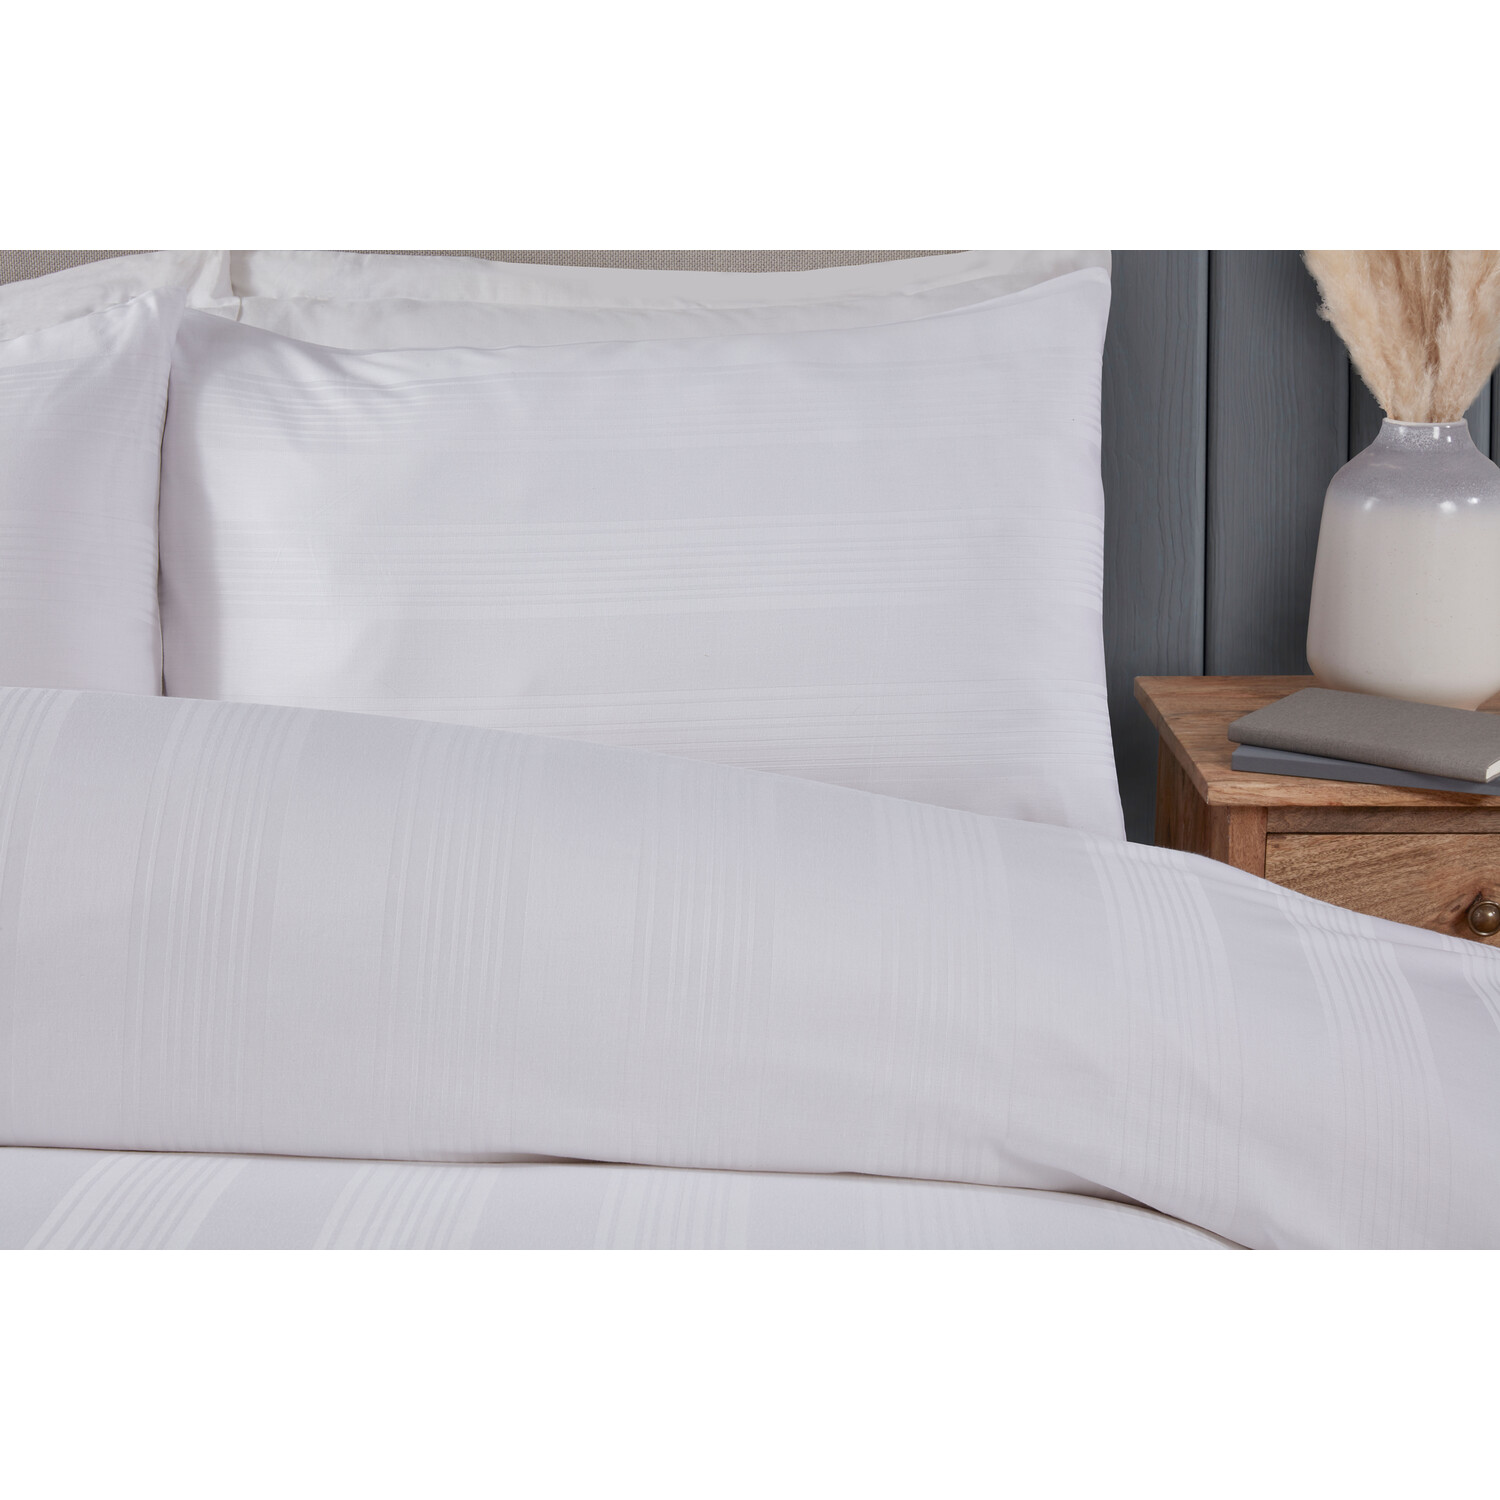 Islington Stripe Sateen Duvet Cover and Pillowcase Set - White / Superking Image 3